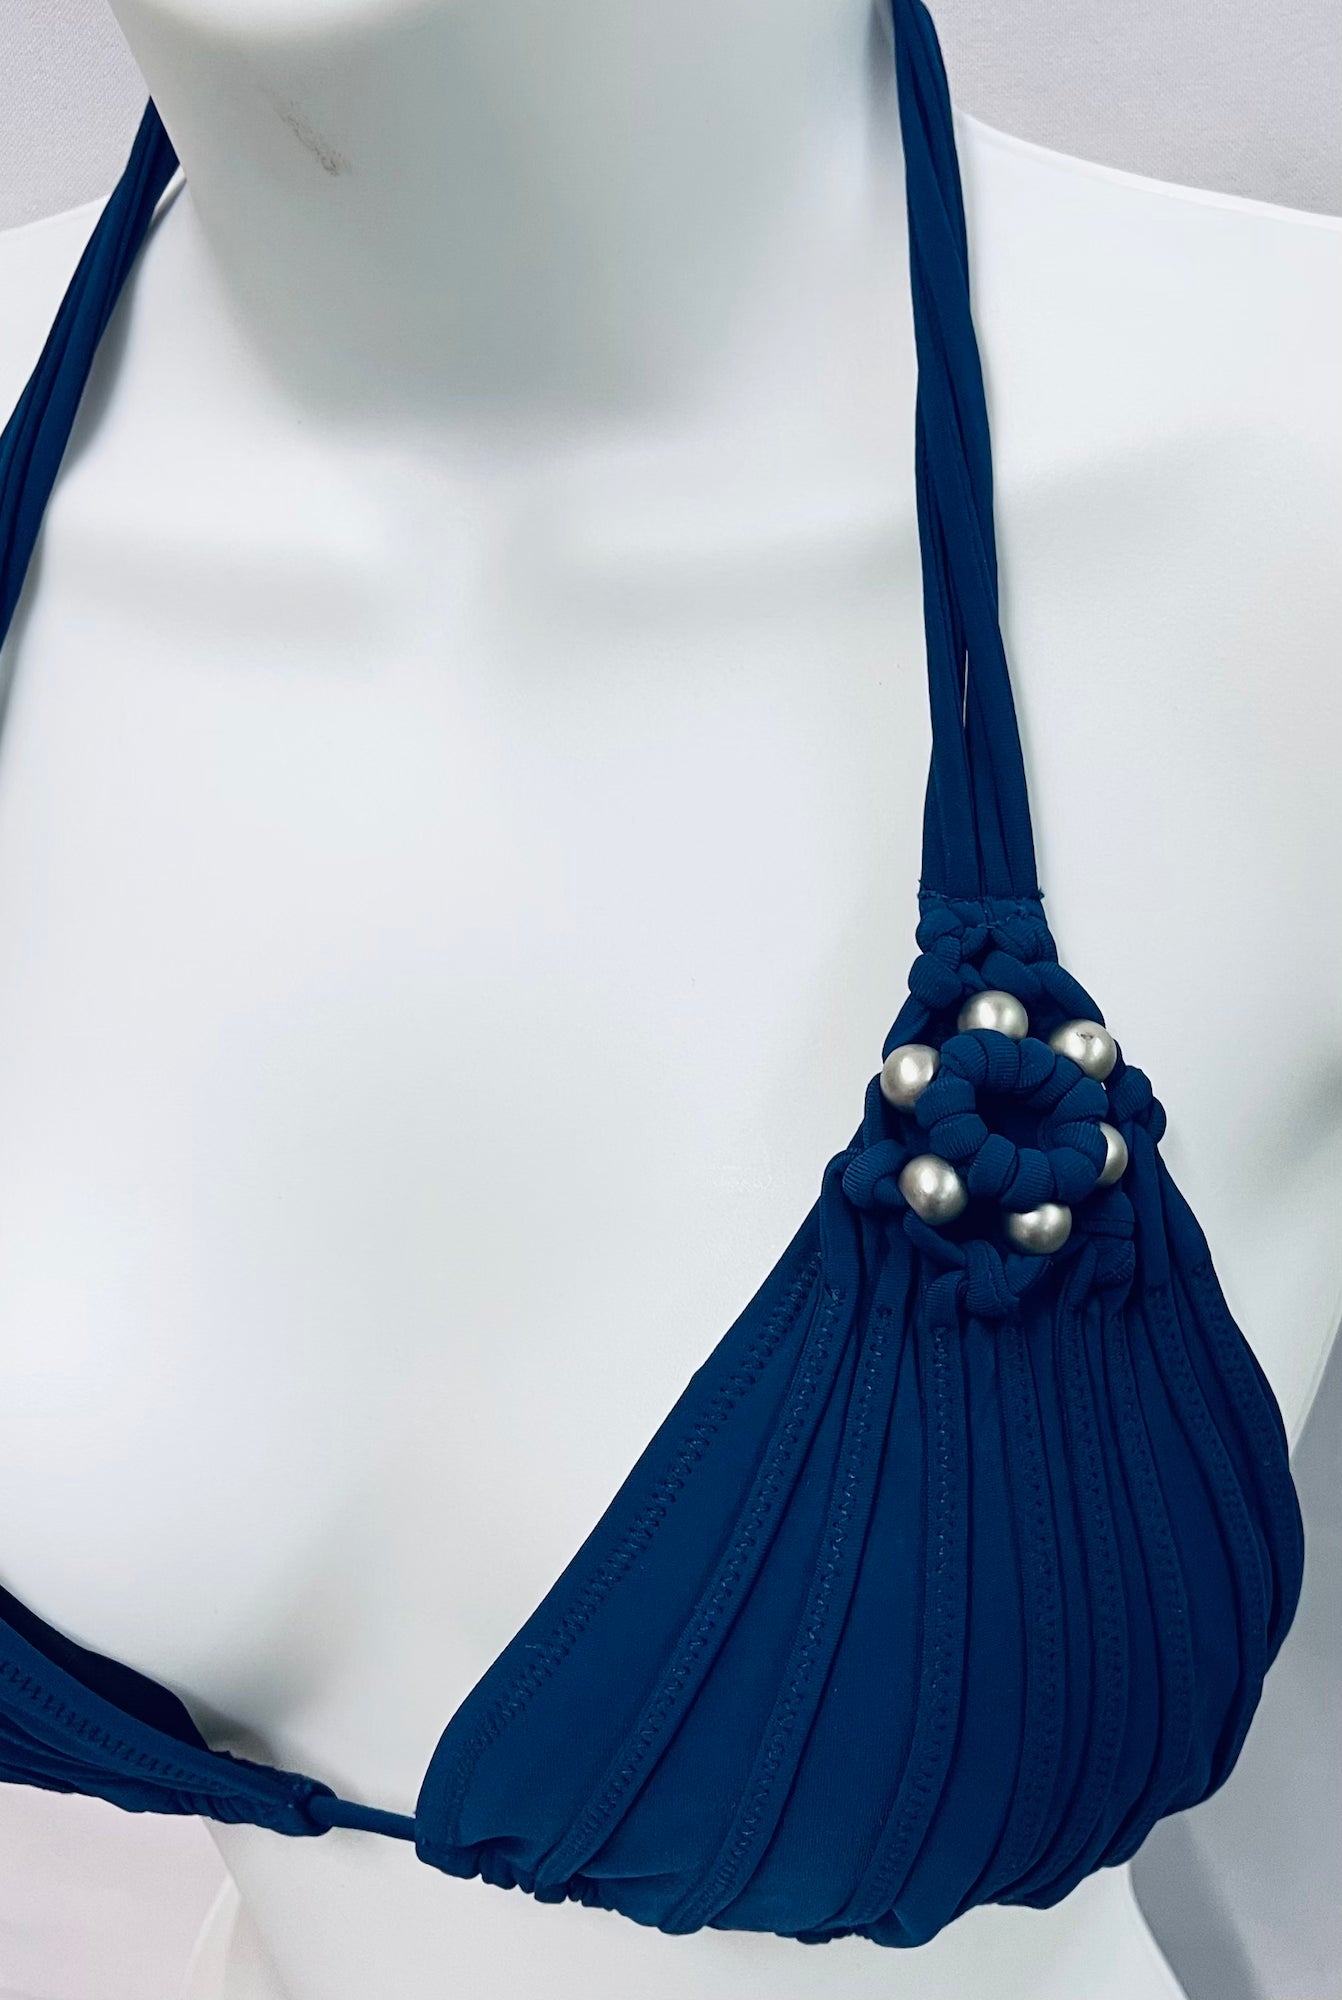 Gottex by Gideon Oberon Textured Padded Halter Bikini Set - forENVY